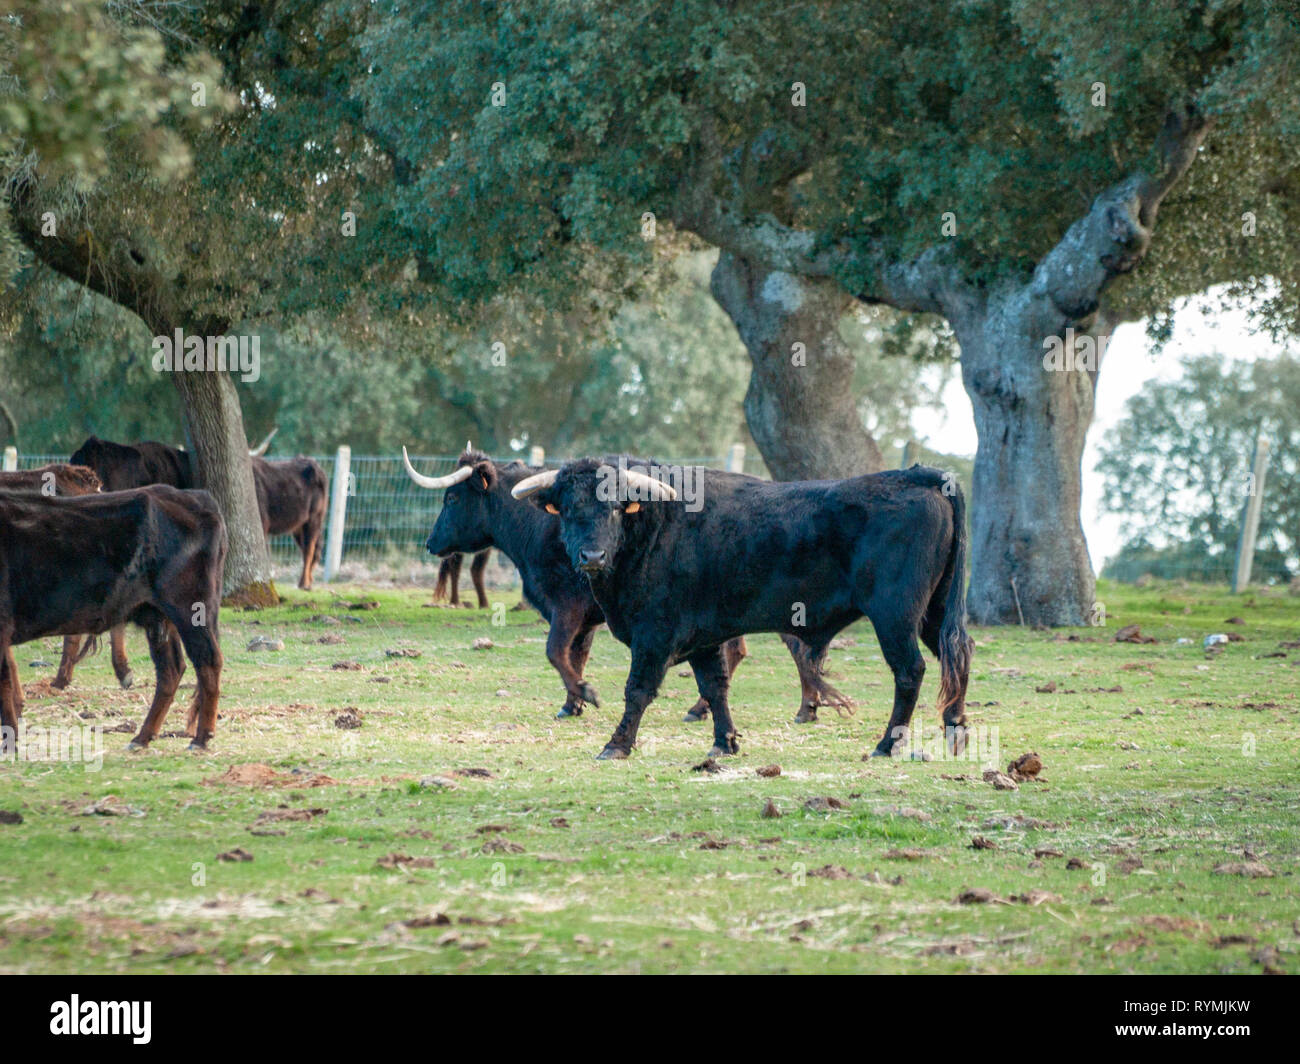 Bulls of toro de lidia breed in the dehesa in Salamanca, Spain. Concept of extensive livestock farming Stock Photo